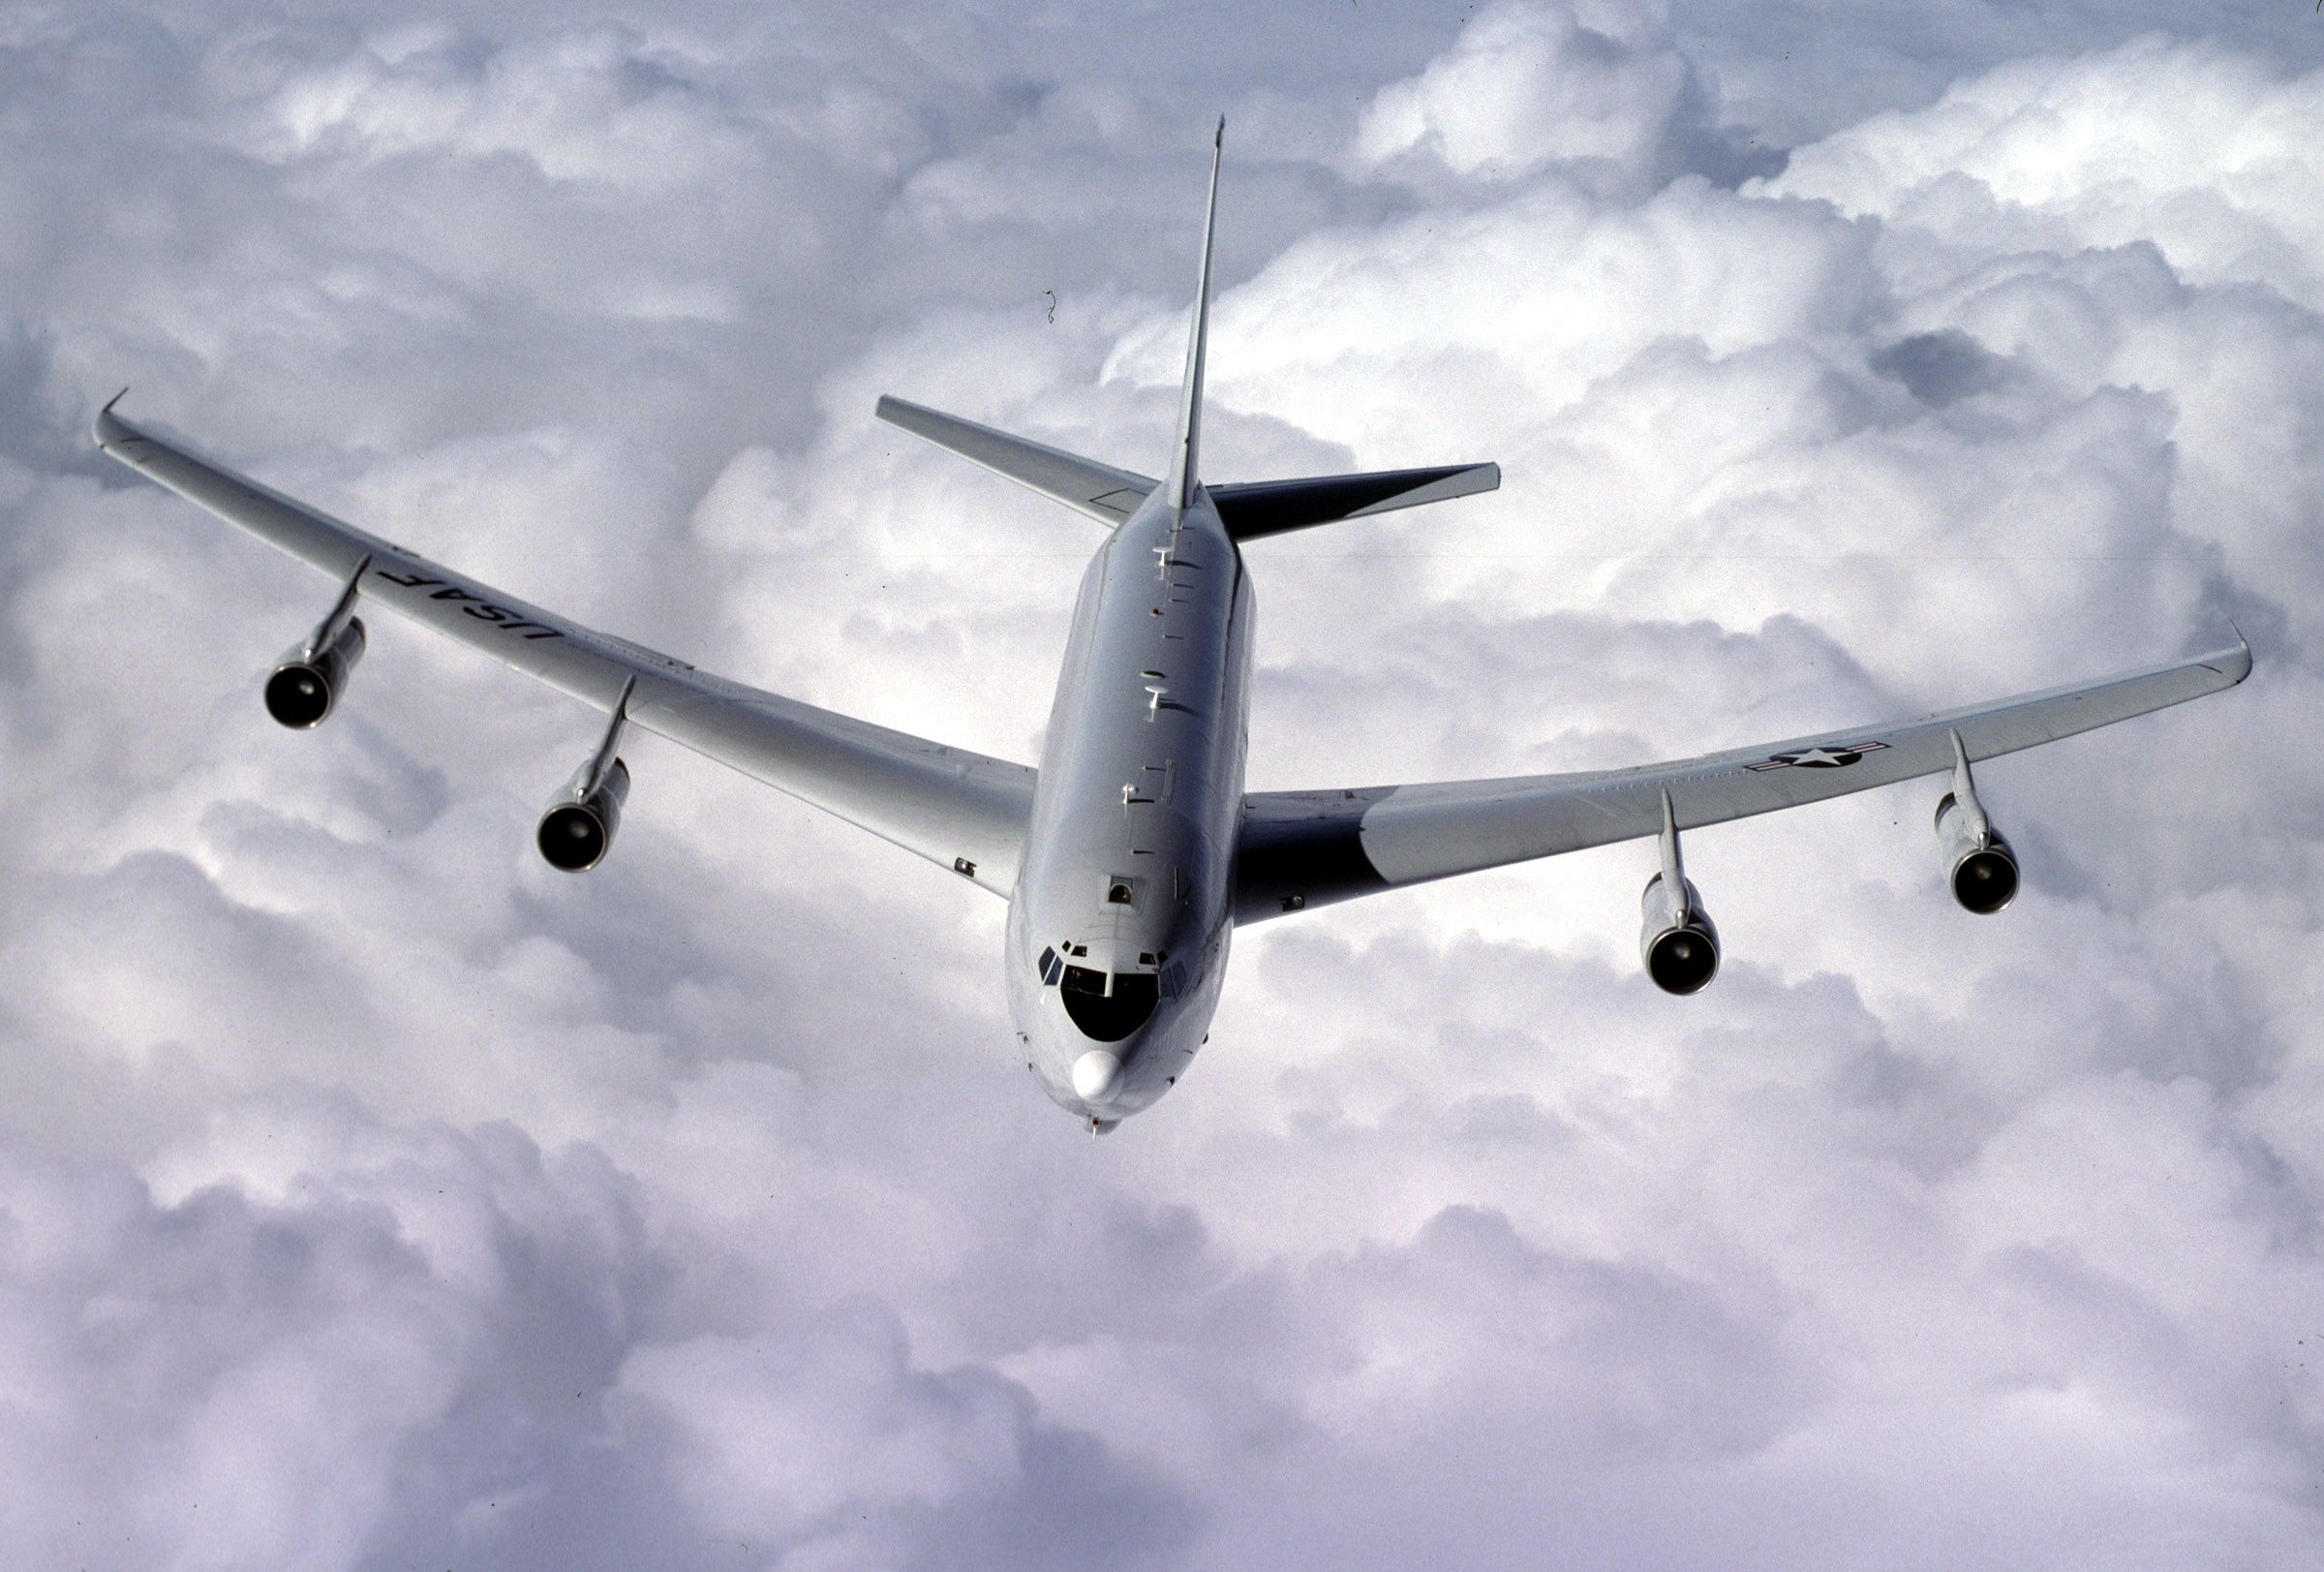 A E-8C Joint STARS buzzes a cloud bank